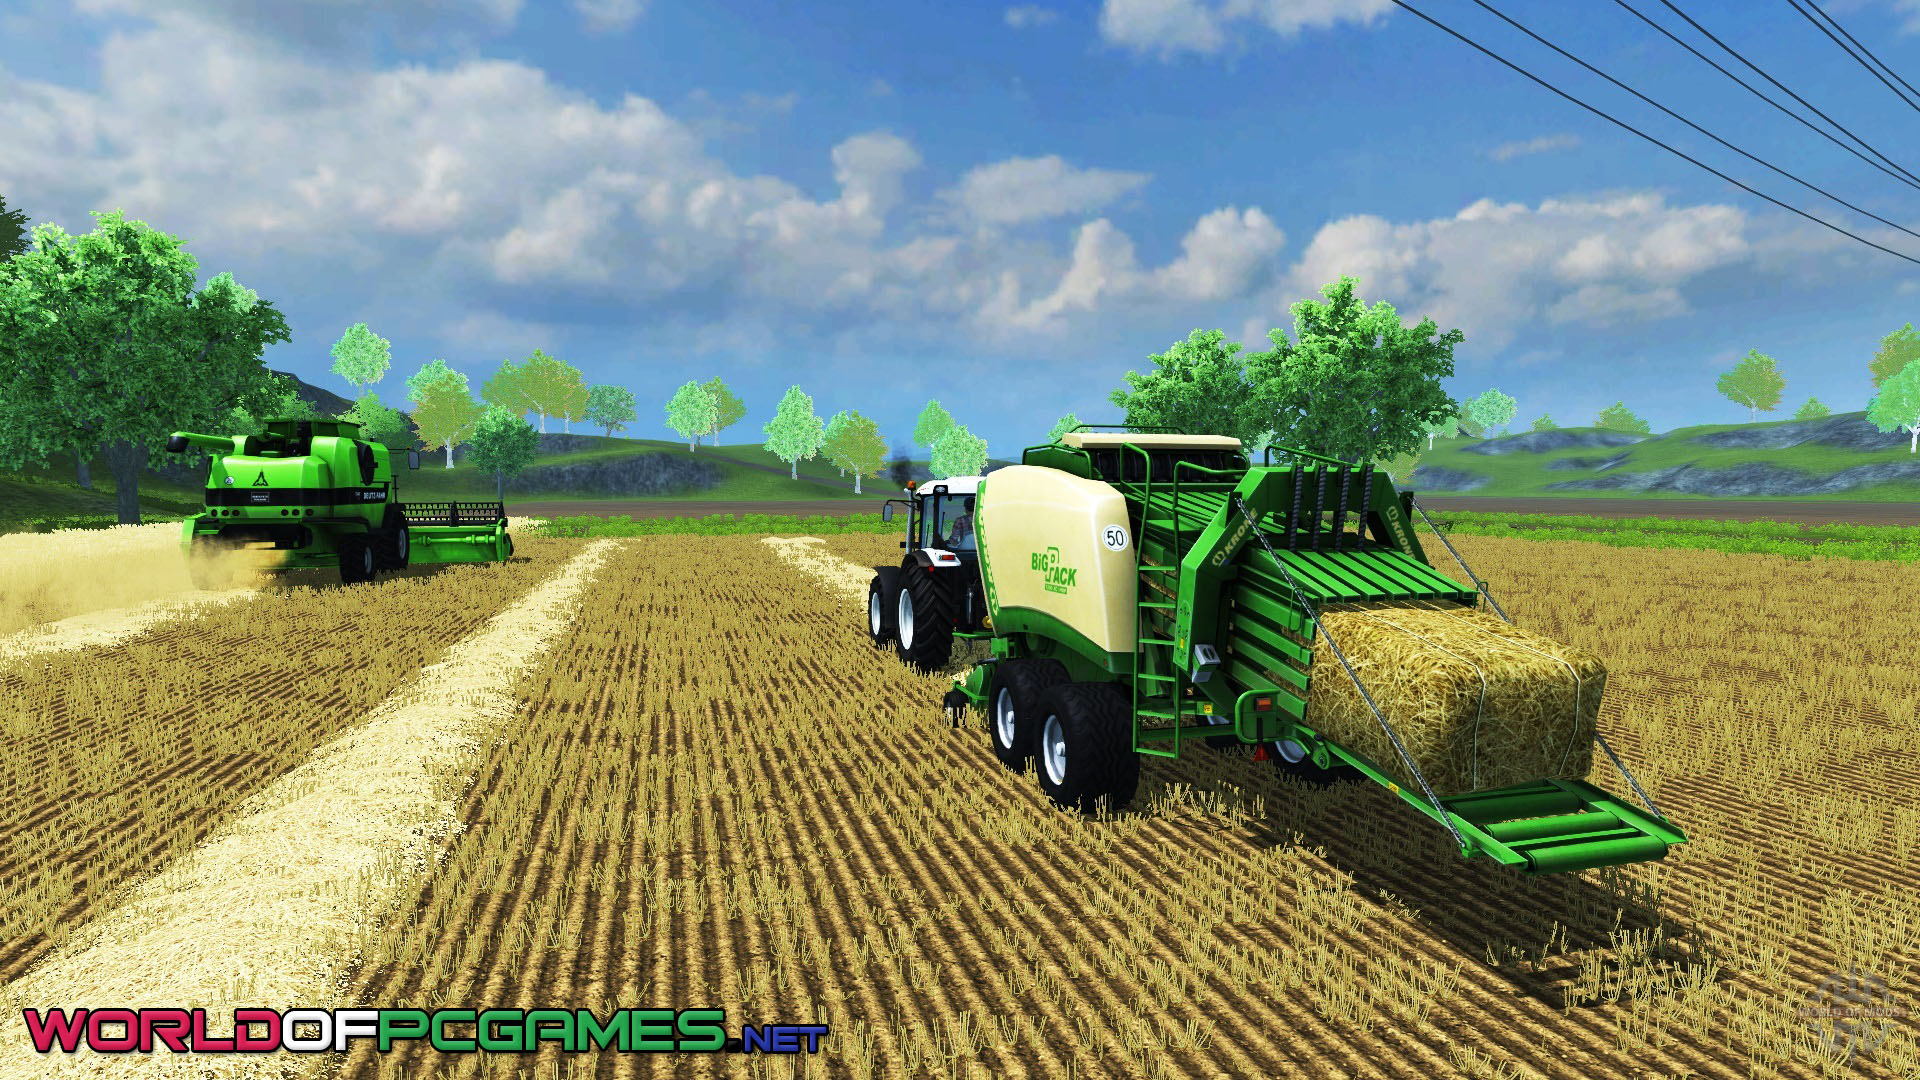 Farming Simulator 17 Free Download By worldof-pcgames.net